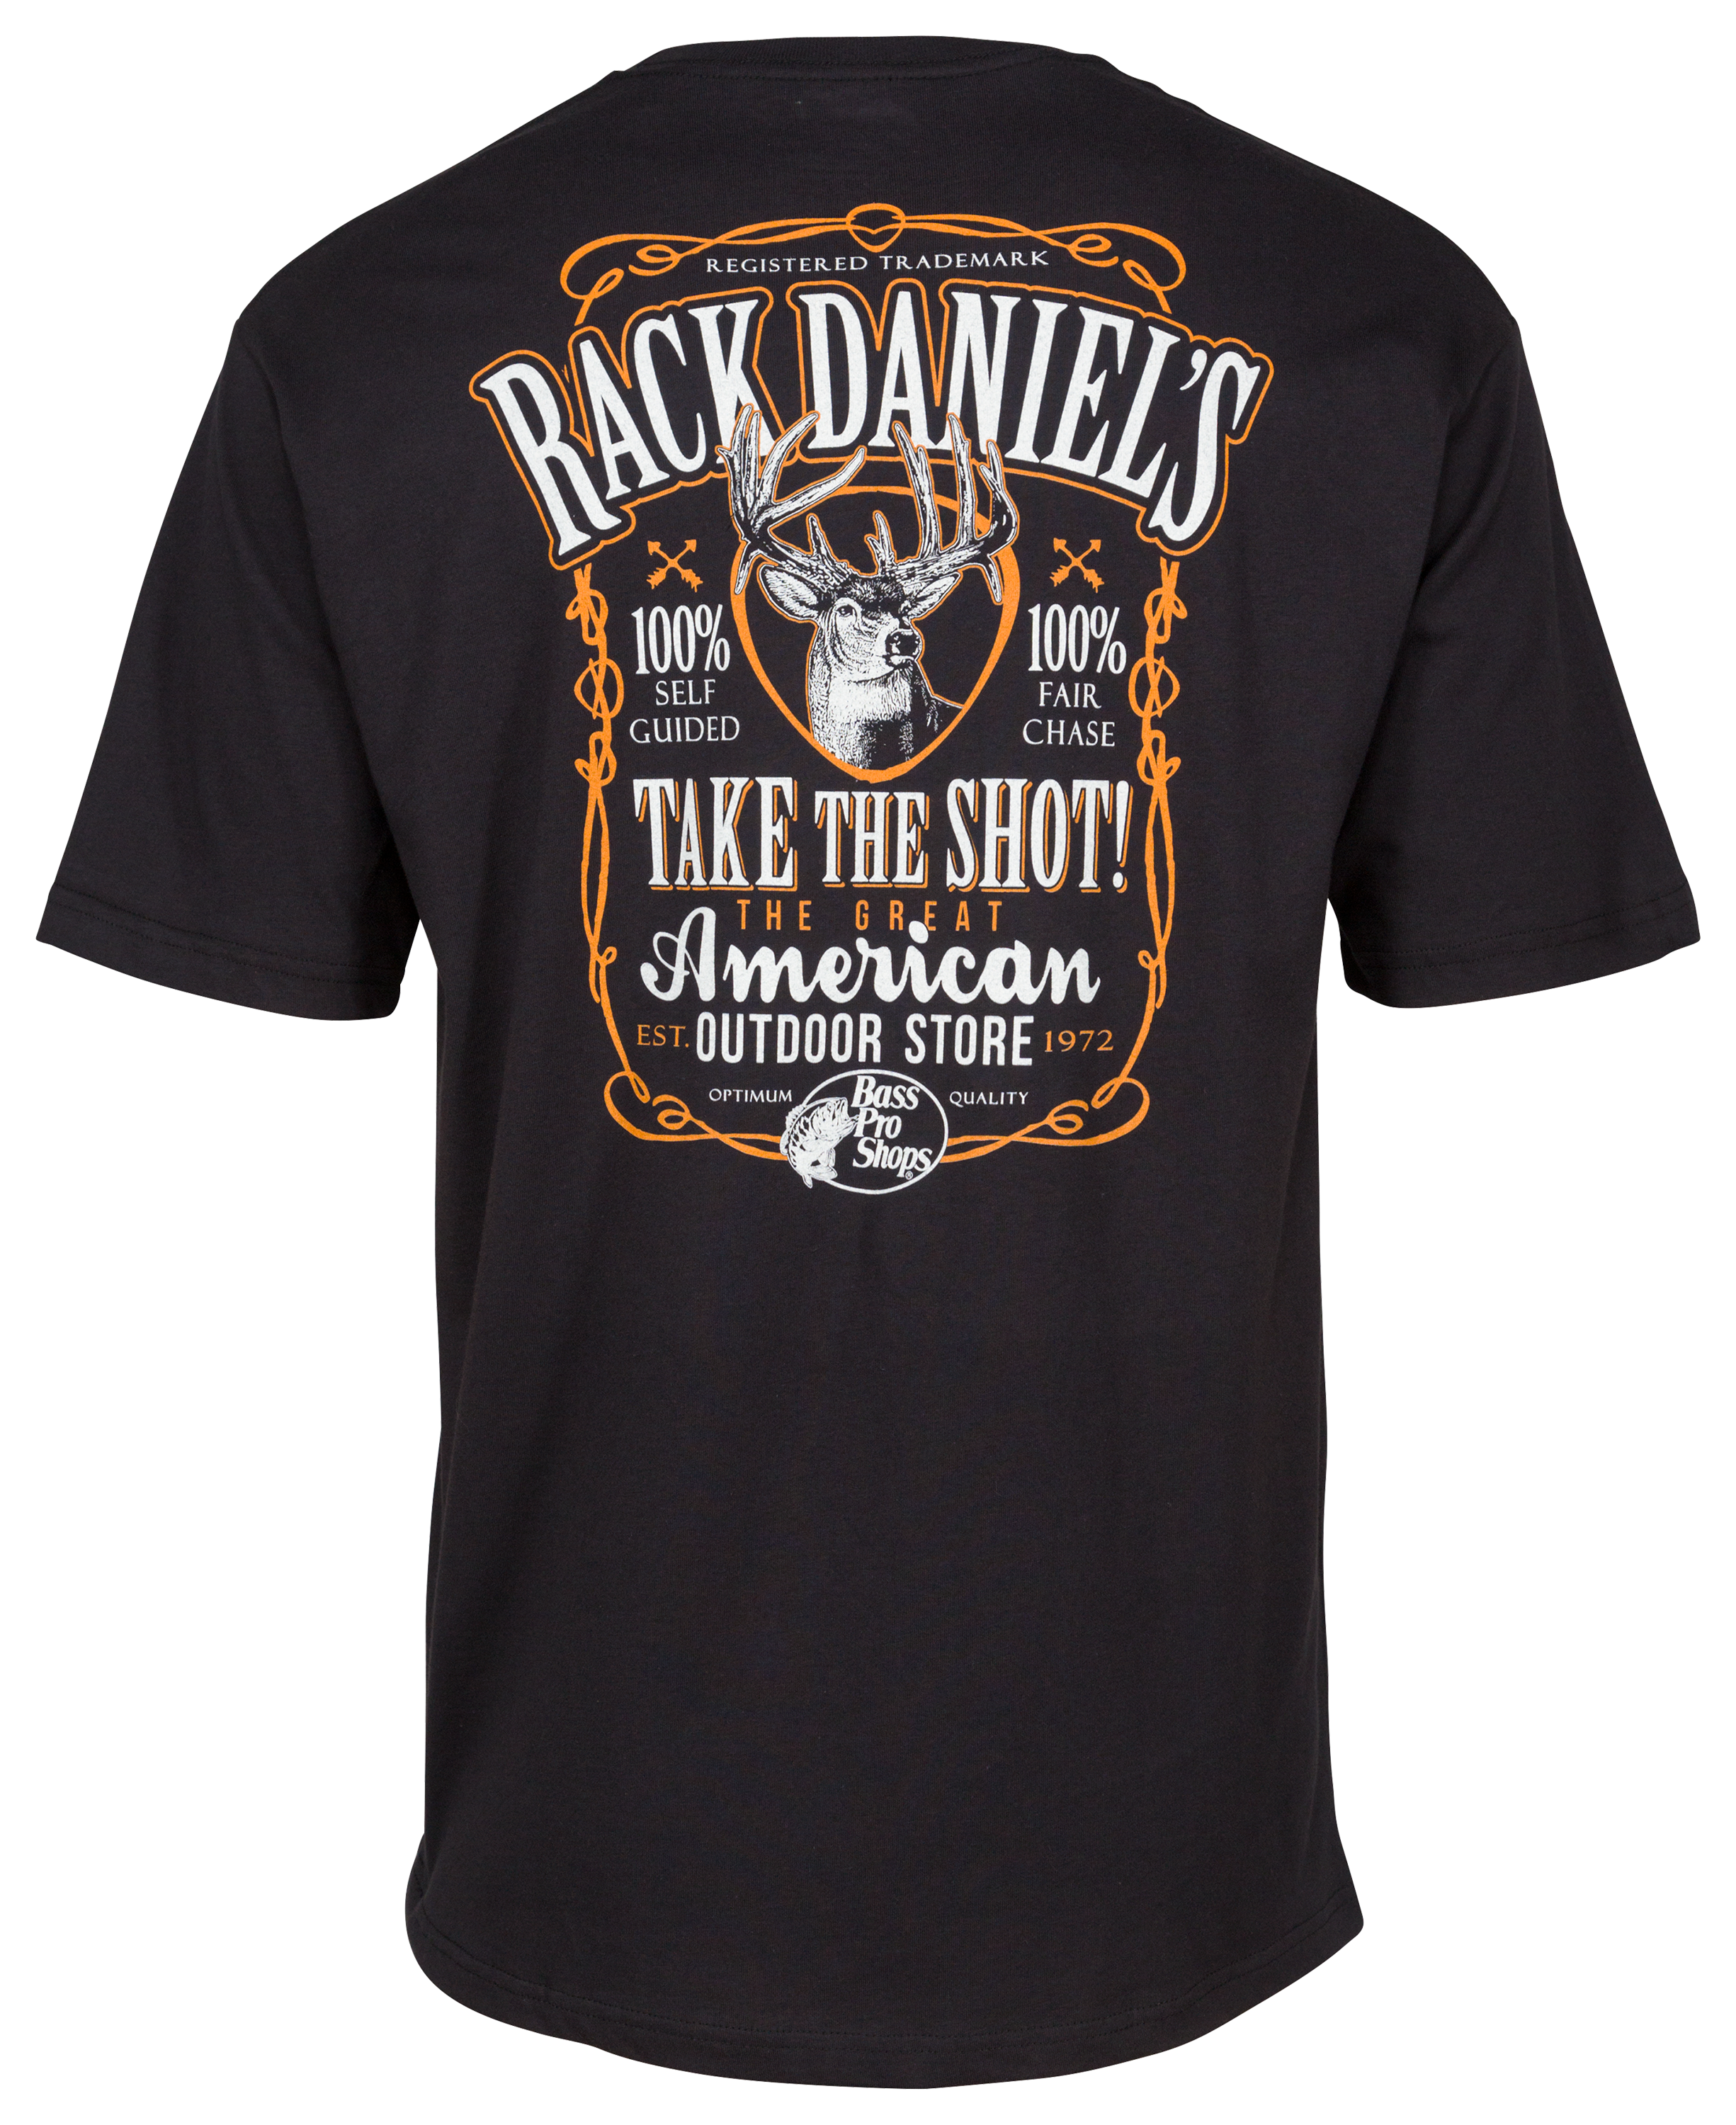 Bass Pro Shops Rack Daniel's II Short-Sleeve T-Shirt for Men - Black - 4XL